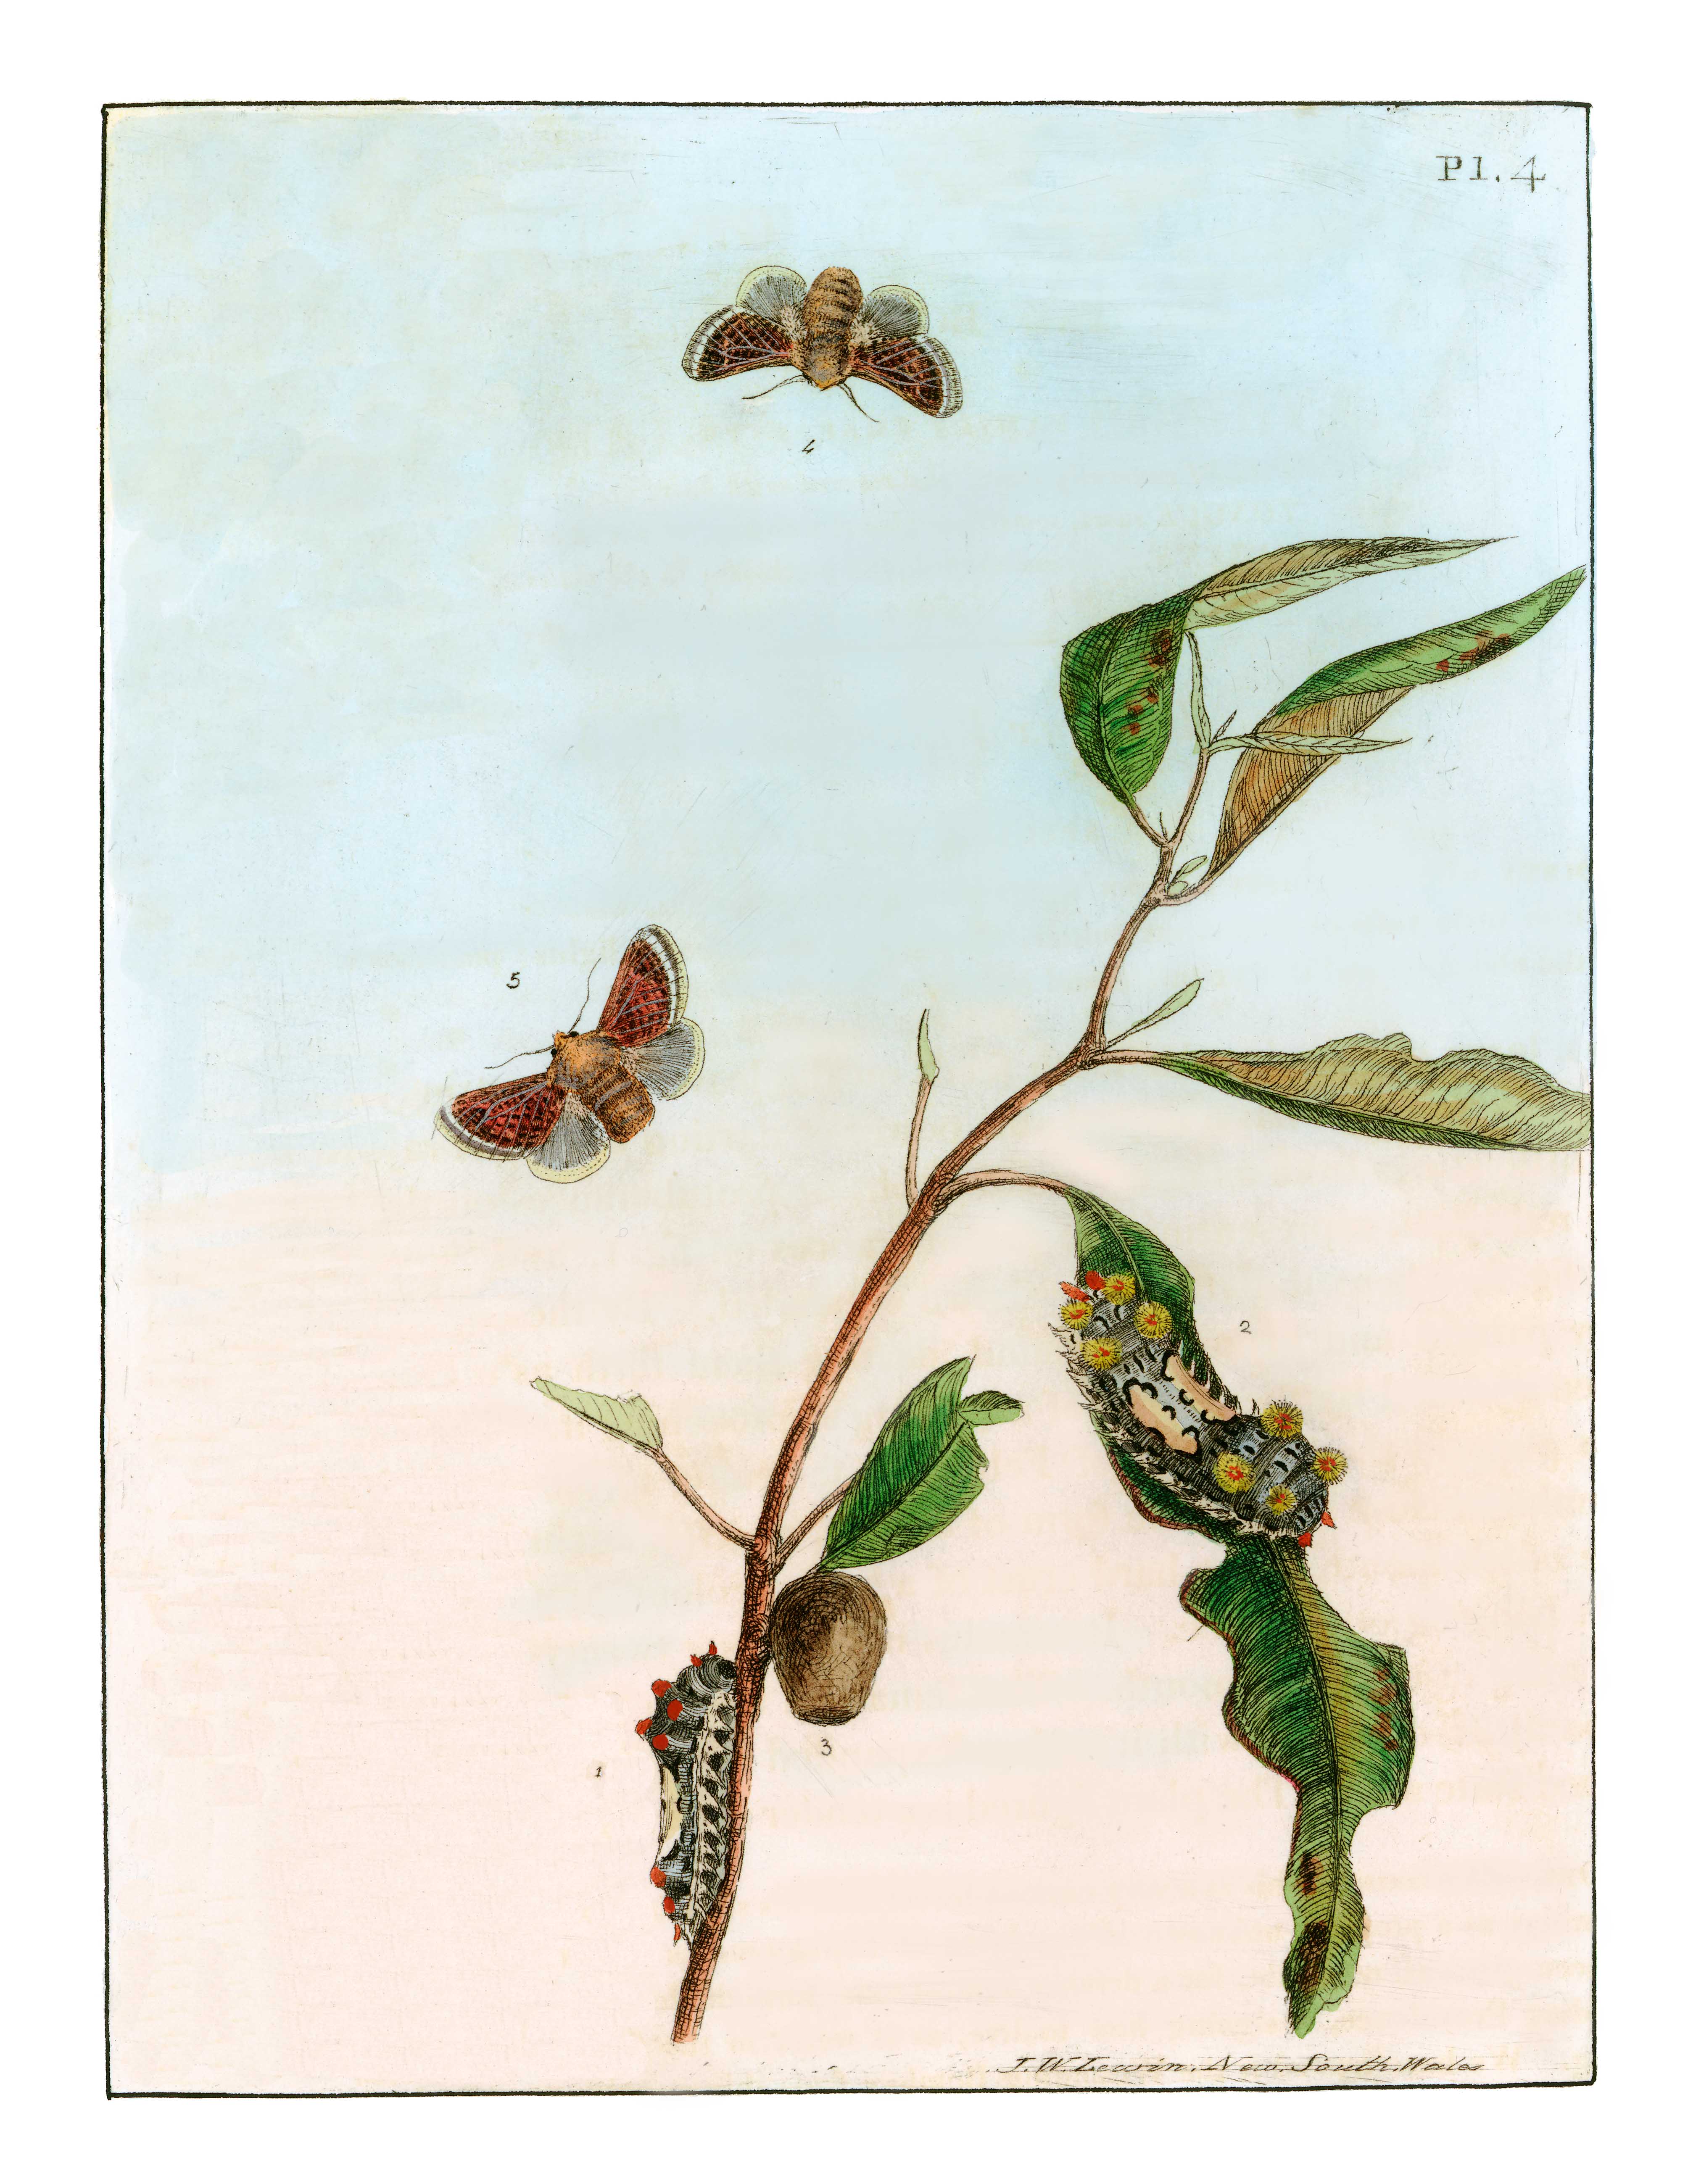 Lewin's lepidoptera